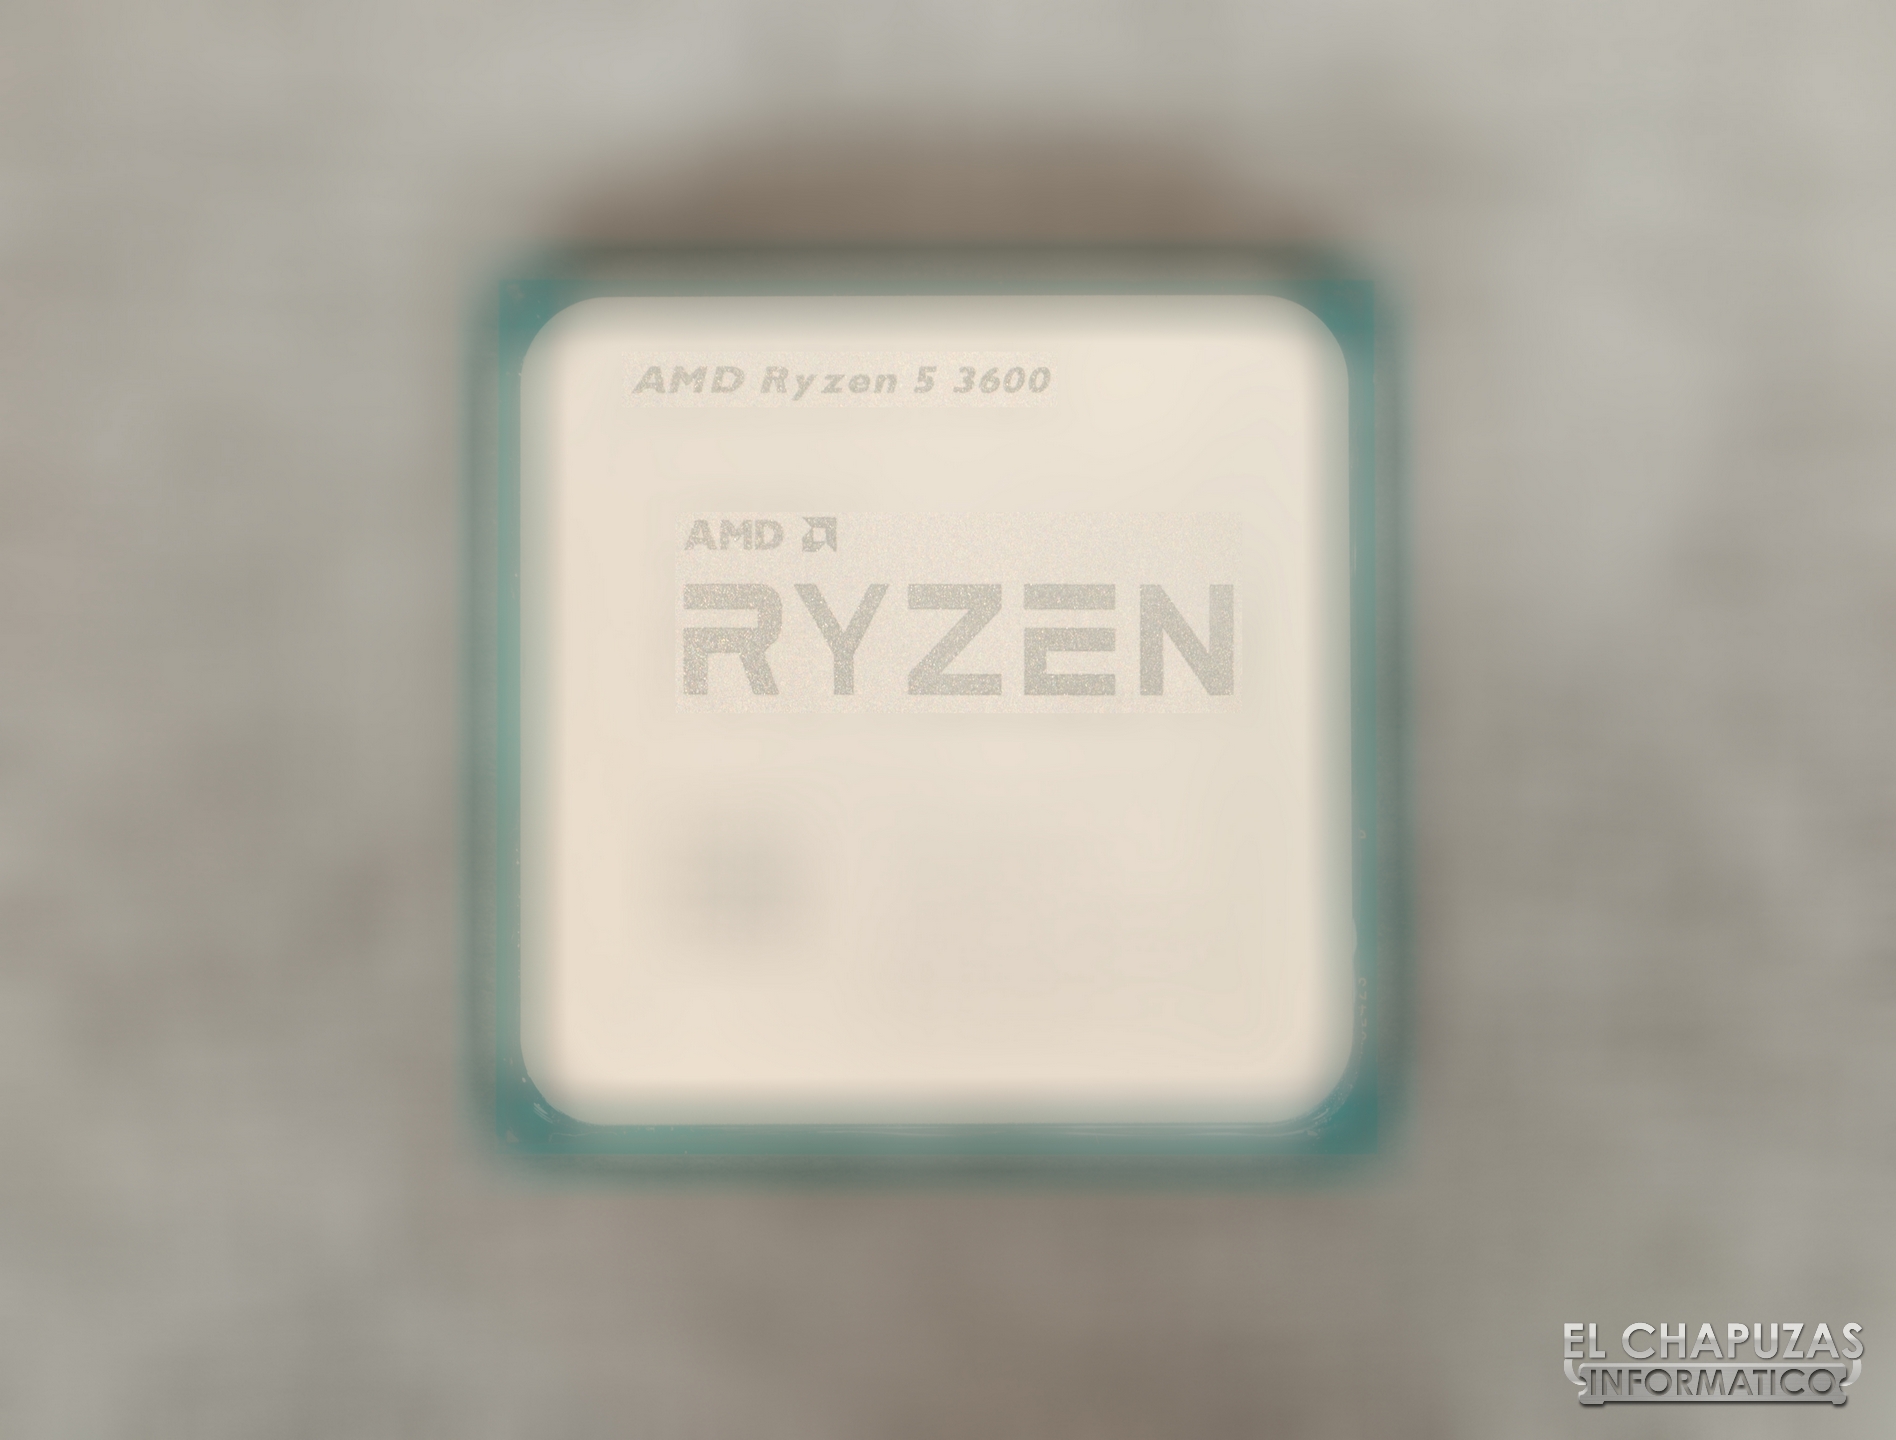 Media asset in full size related to 3dfxzone.it news item entitled as follows: La CPU Ryzen 5 3600 potrebbe avere prestazioni simili a quelle del Ryzen 7 2700X | Image Name: news29723_AMD-Ryzen-5-3600_2.jpg